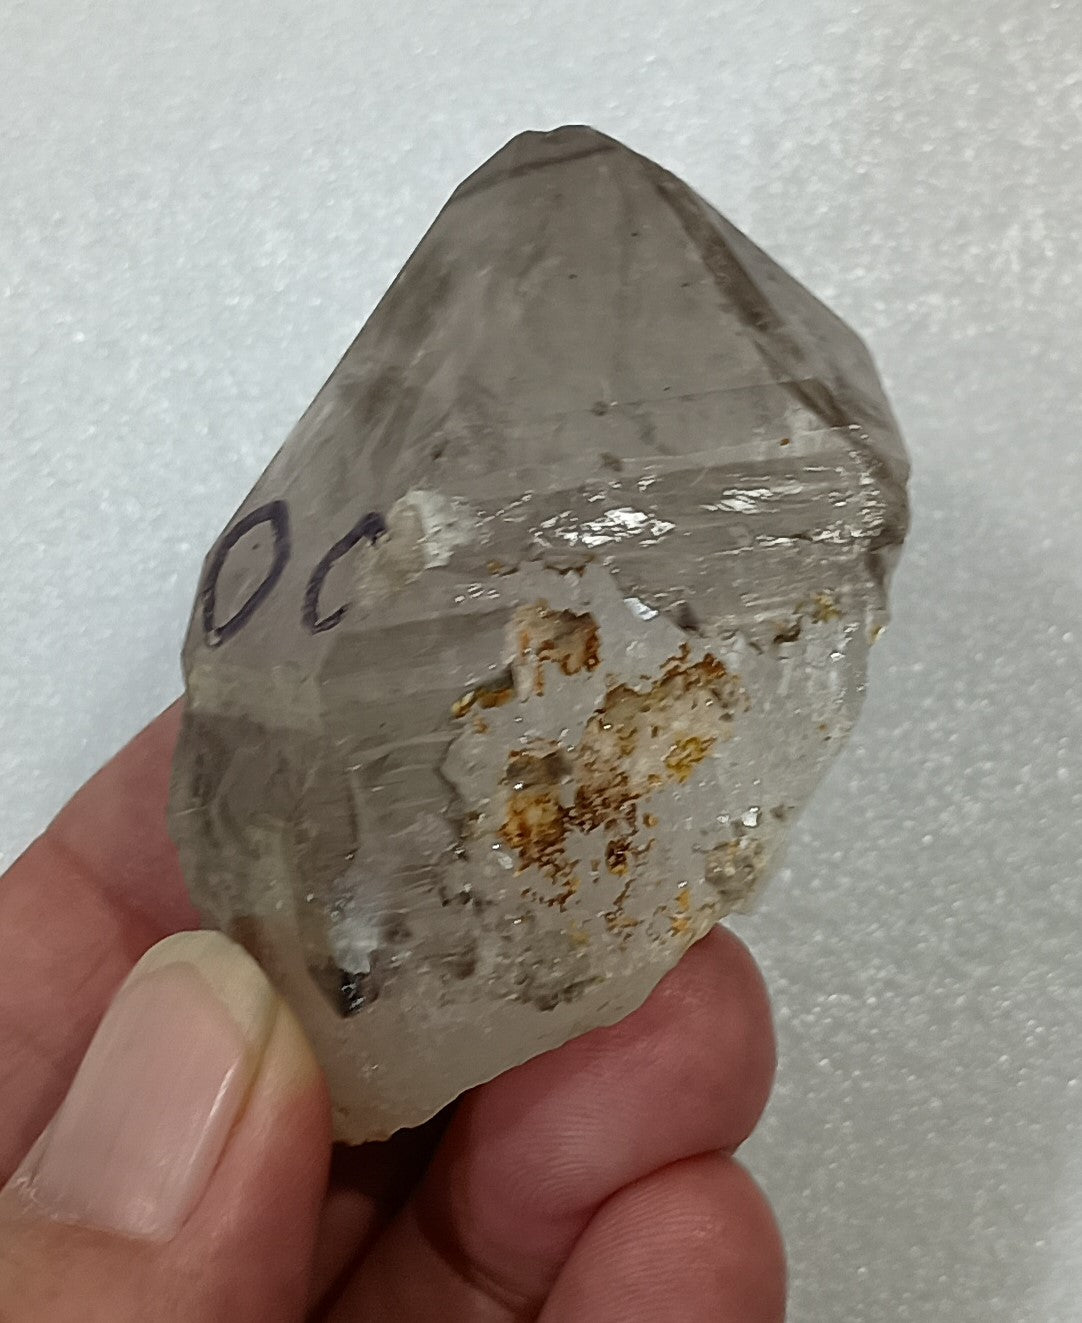 Arkansas Smoky Quartz Enhydro Crystal